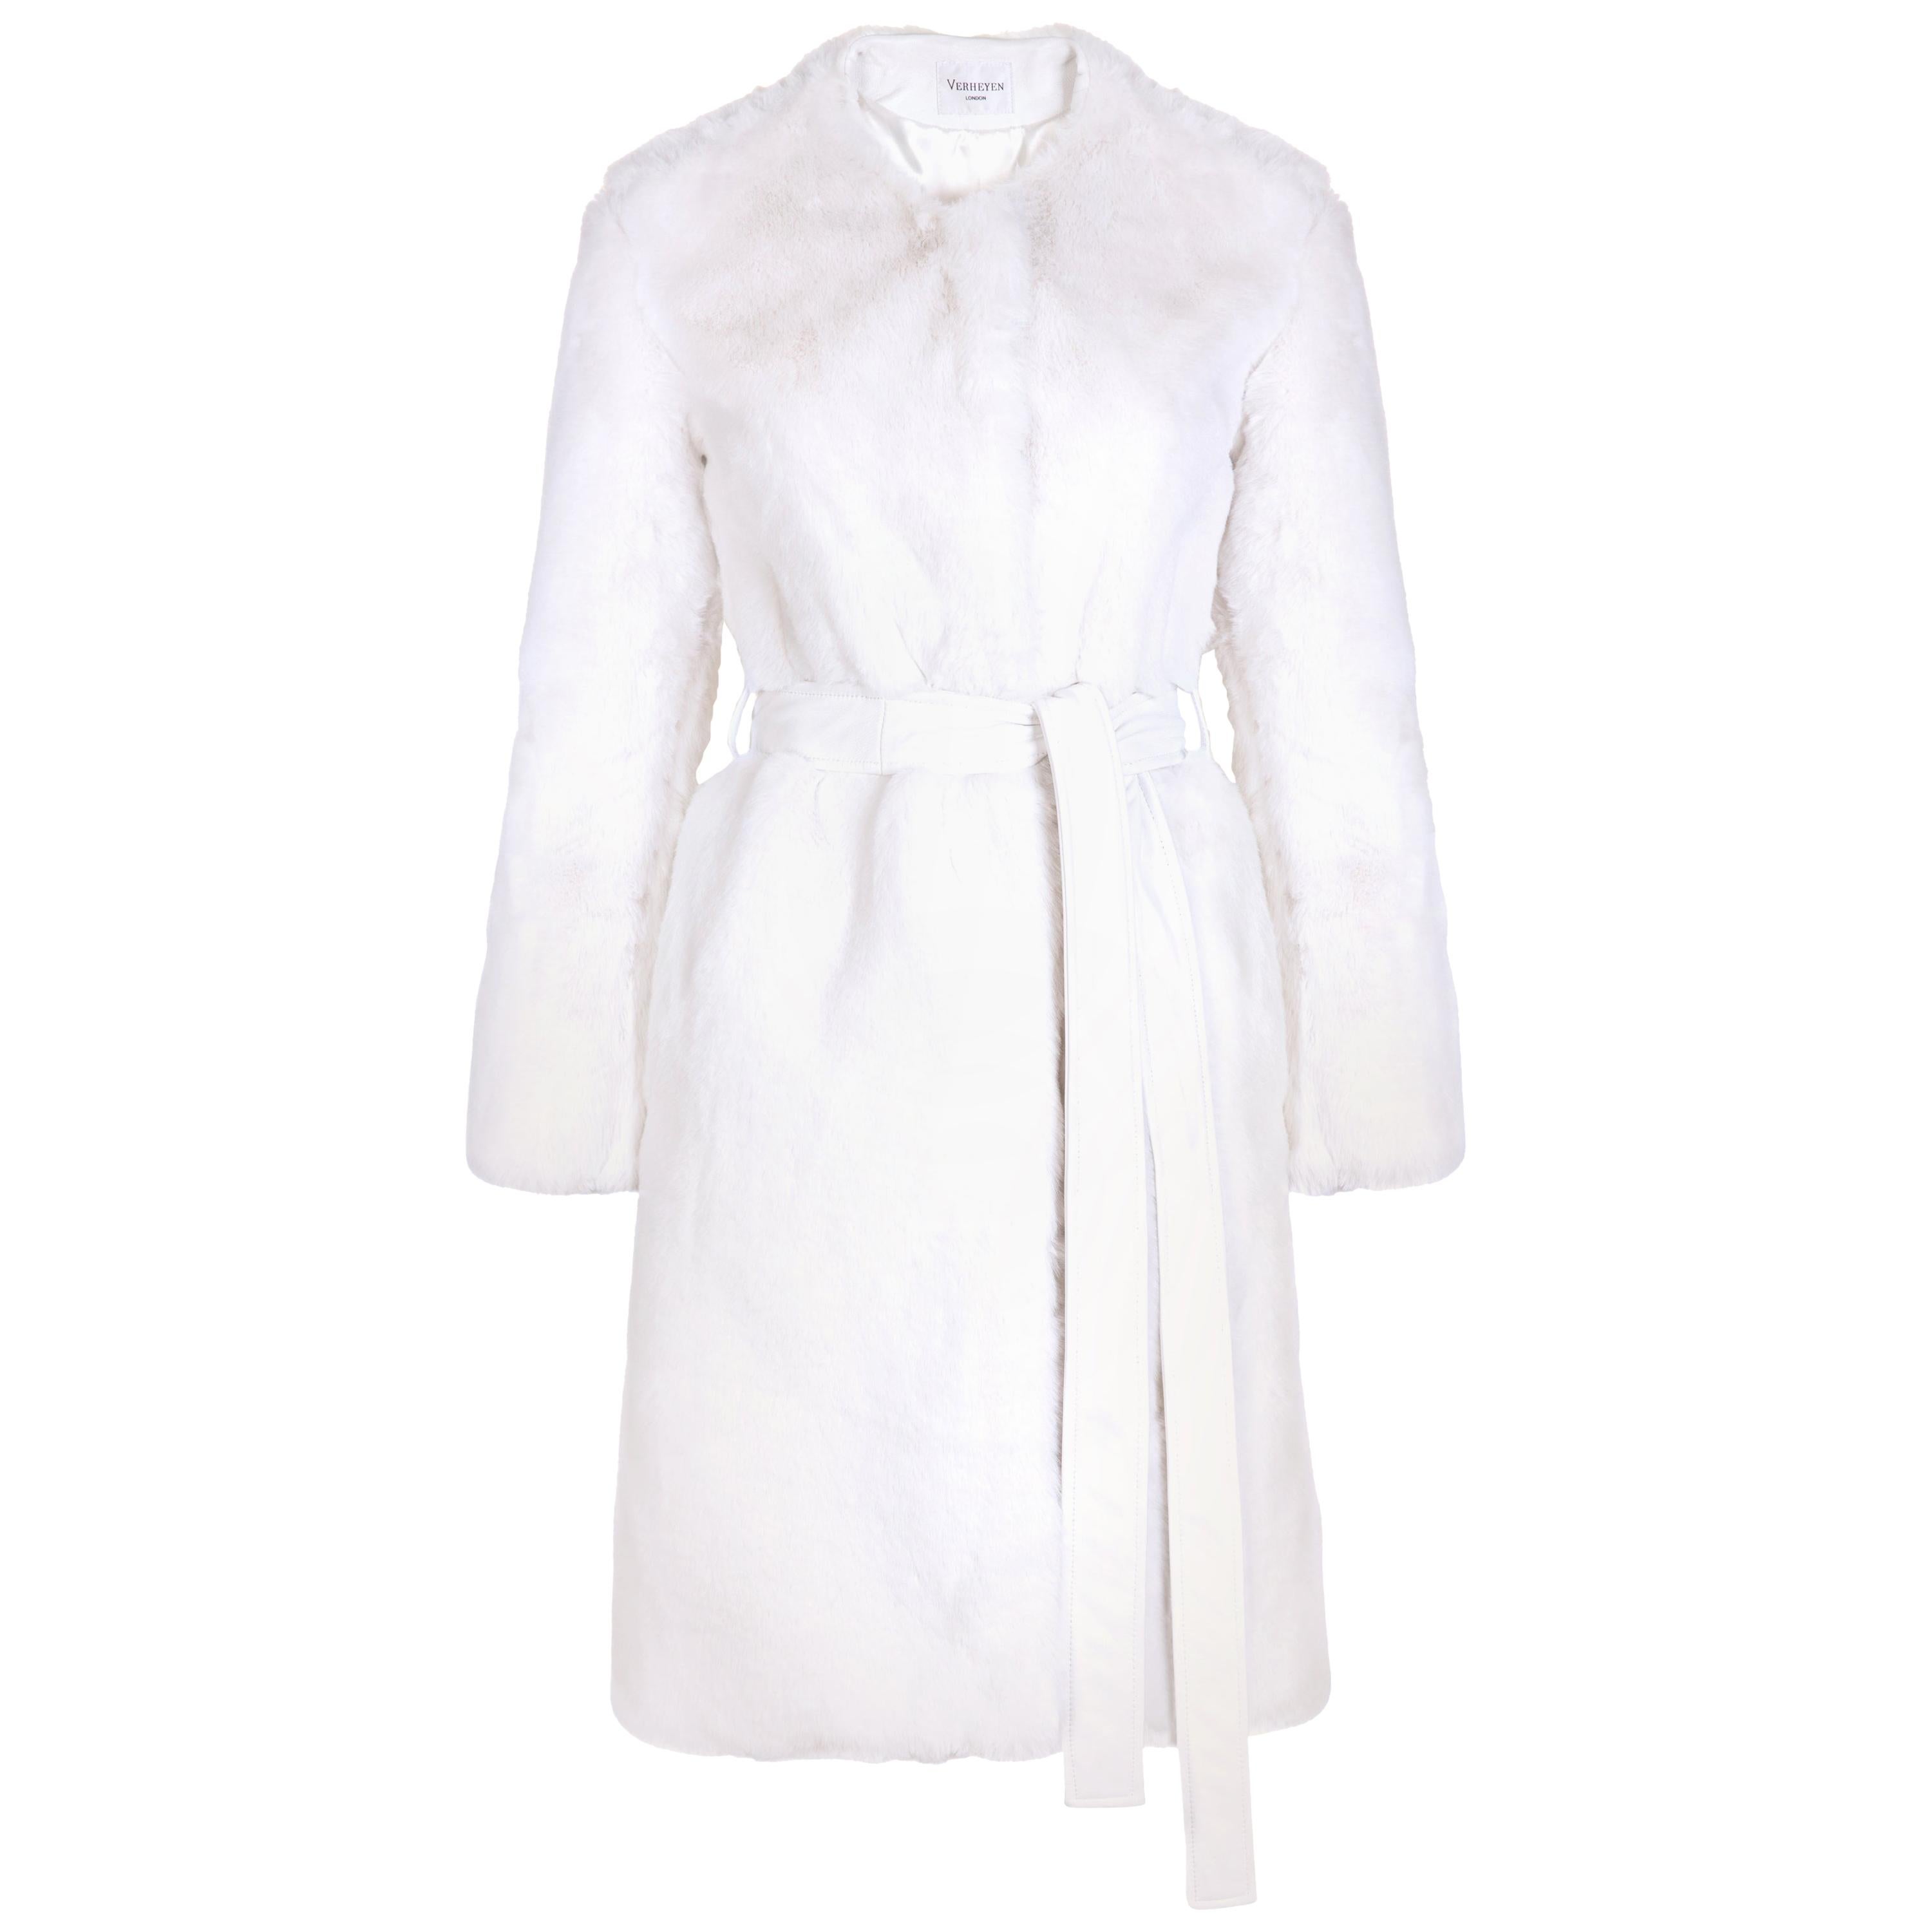 Verheyen London Serena  Collarless Faux Fur Coat in White - Size uk 10 For Sale